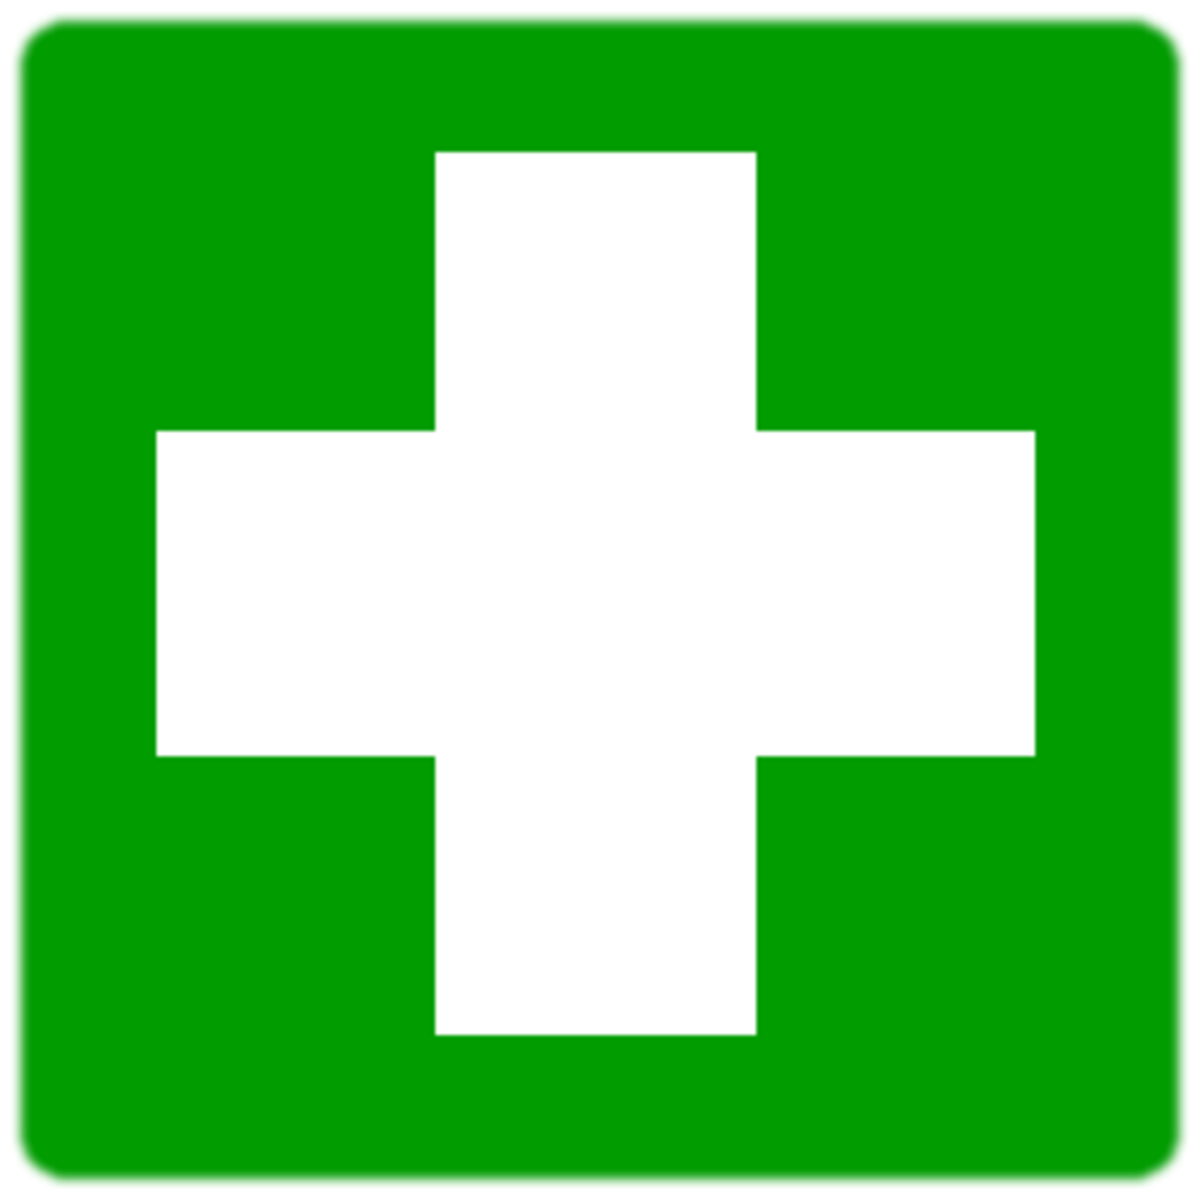 International symbol for first aid